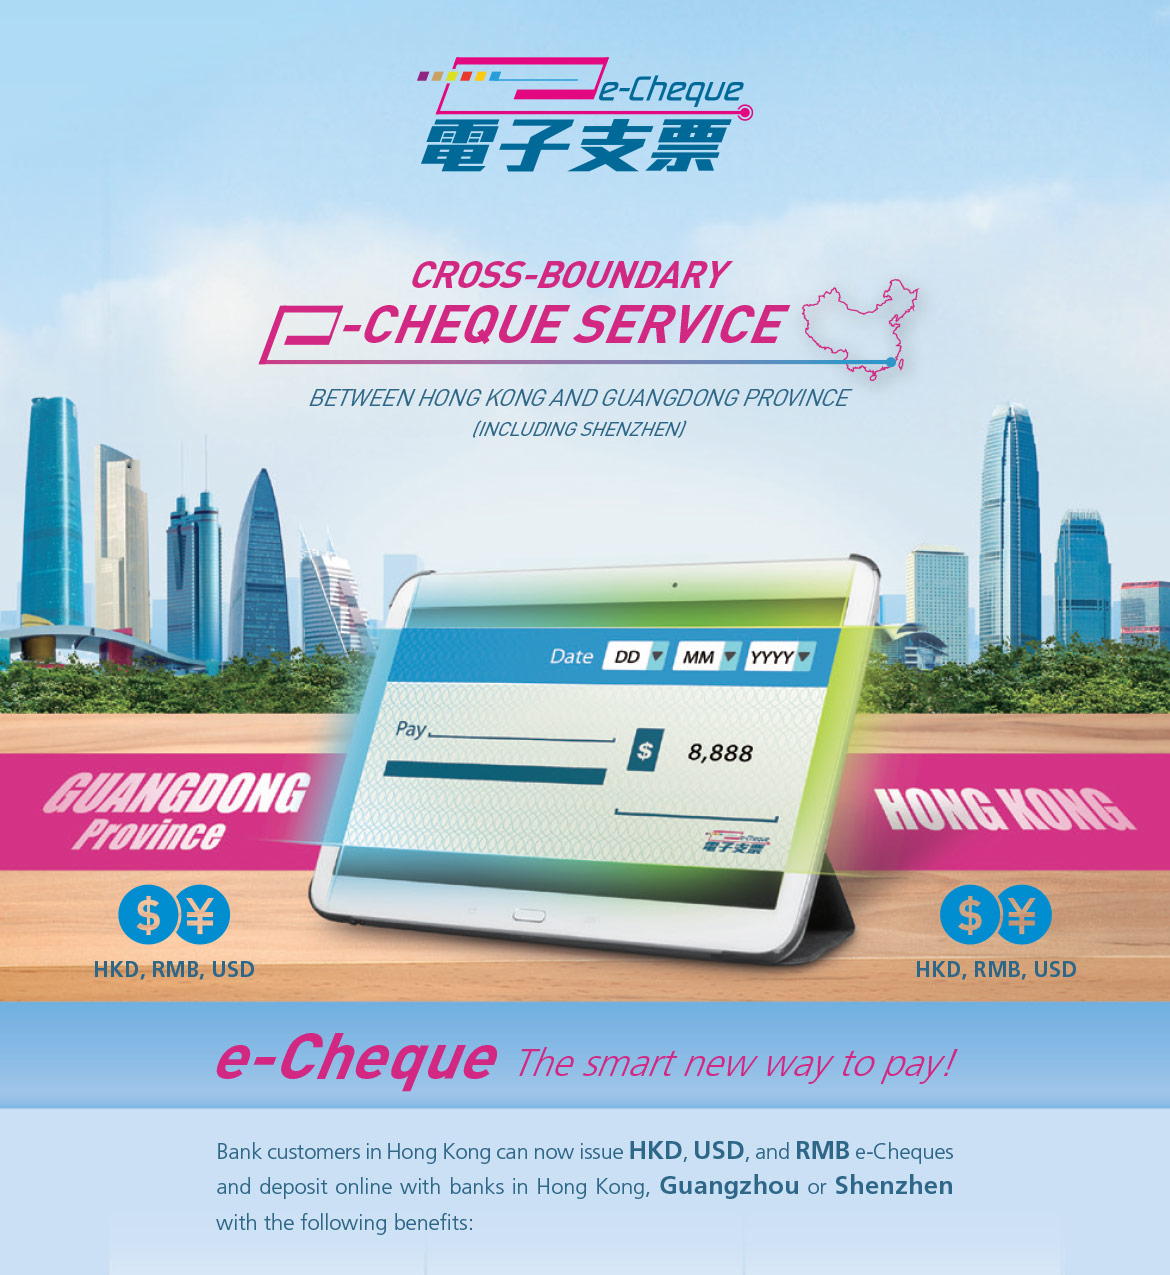 e-Brochure - Cross-boundary e-Cheque Service between Hong Kong and Guangdong Province (including Shenzhen)